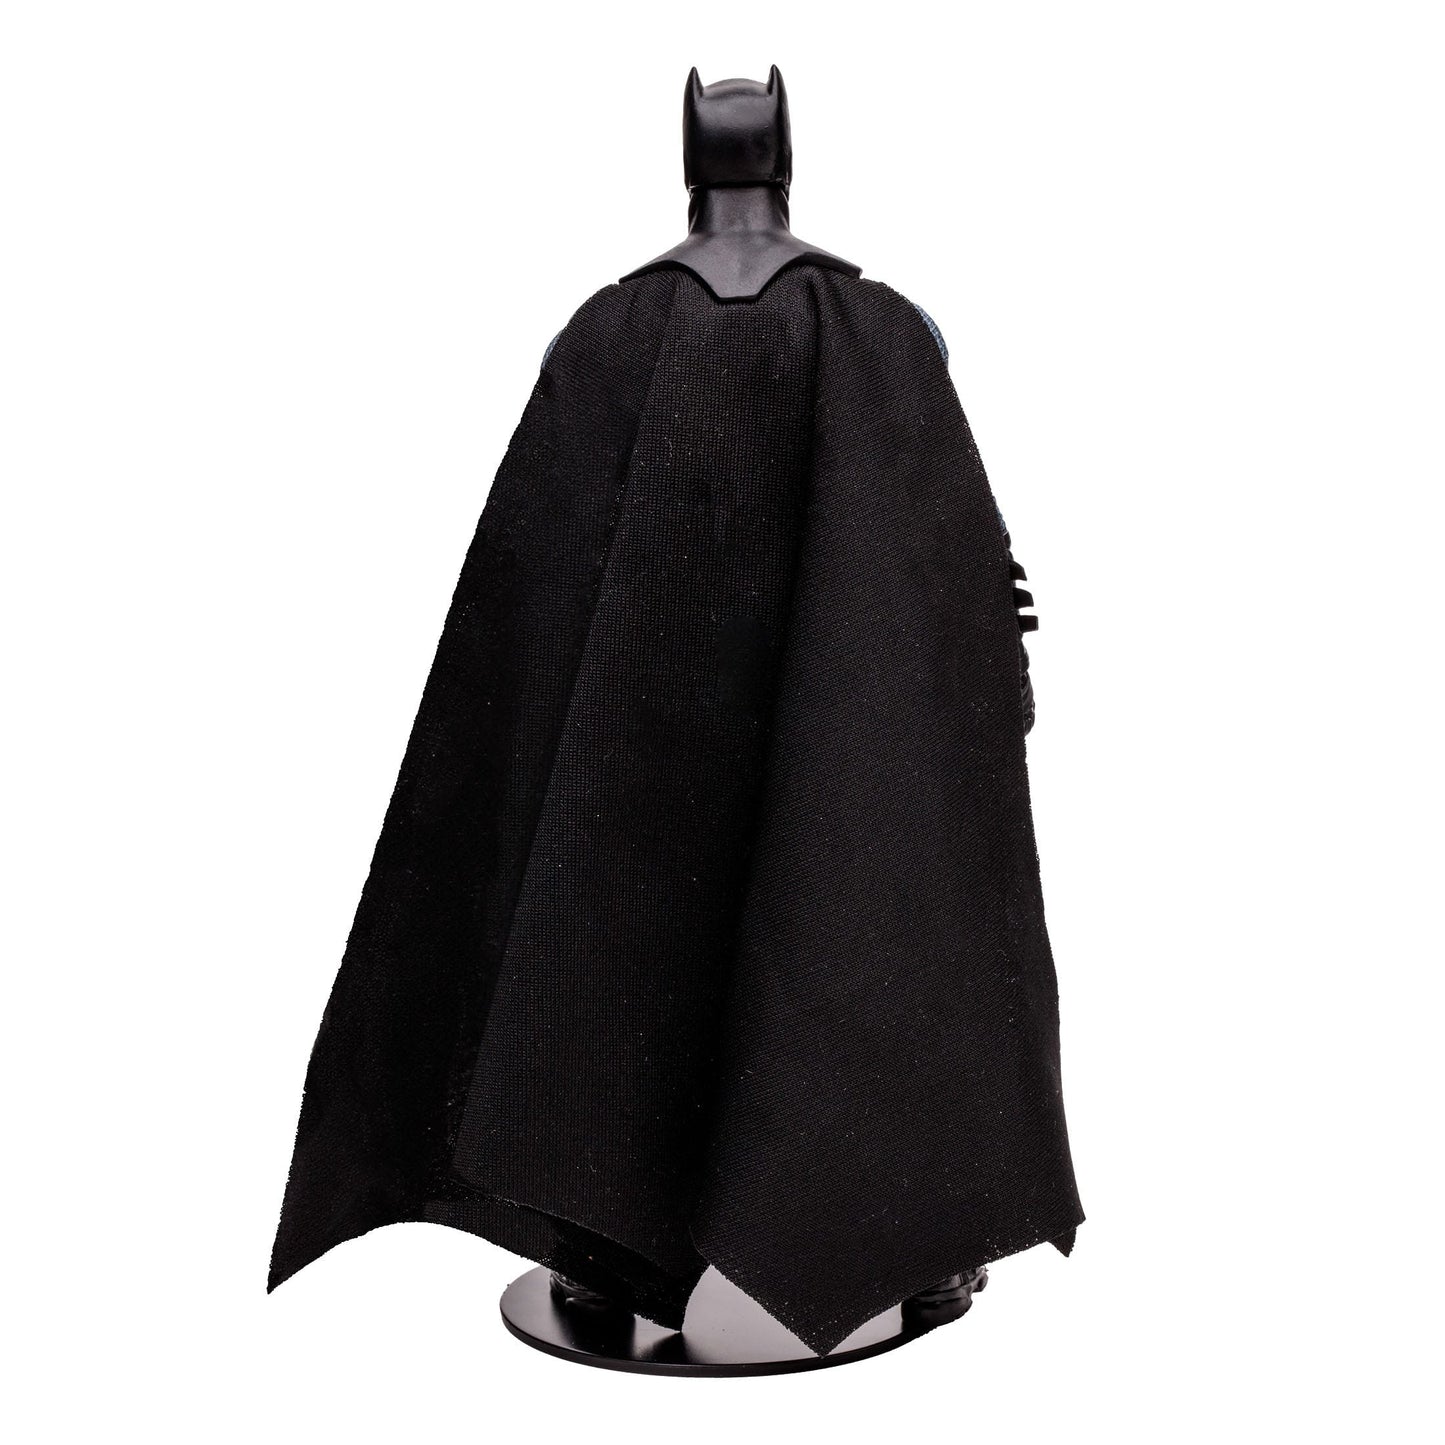 DC Multiverse Batman (Batman Vs Superman) 18 cm